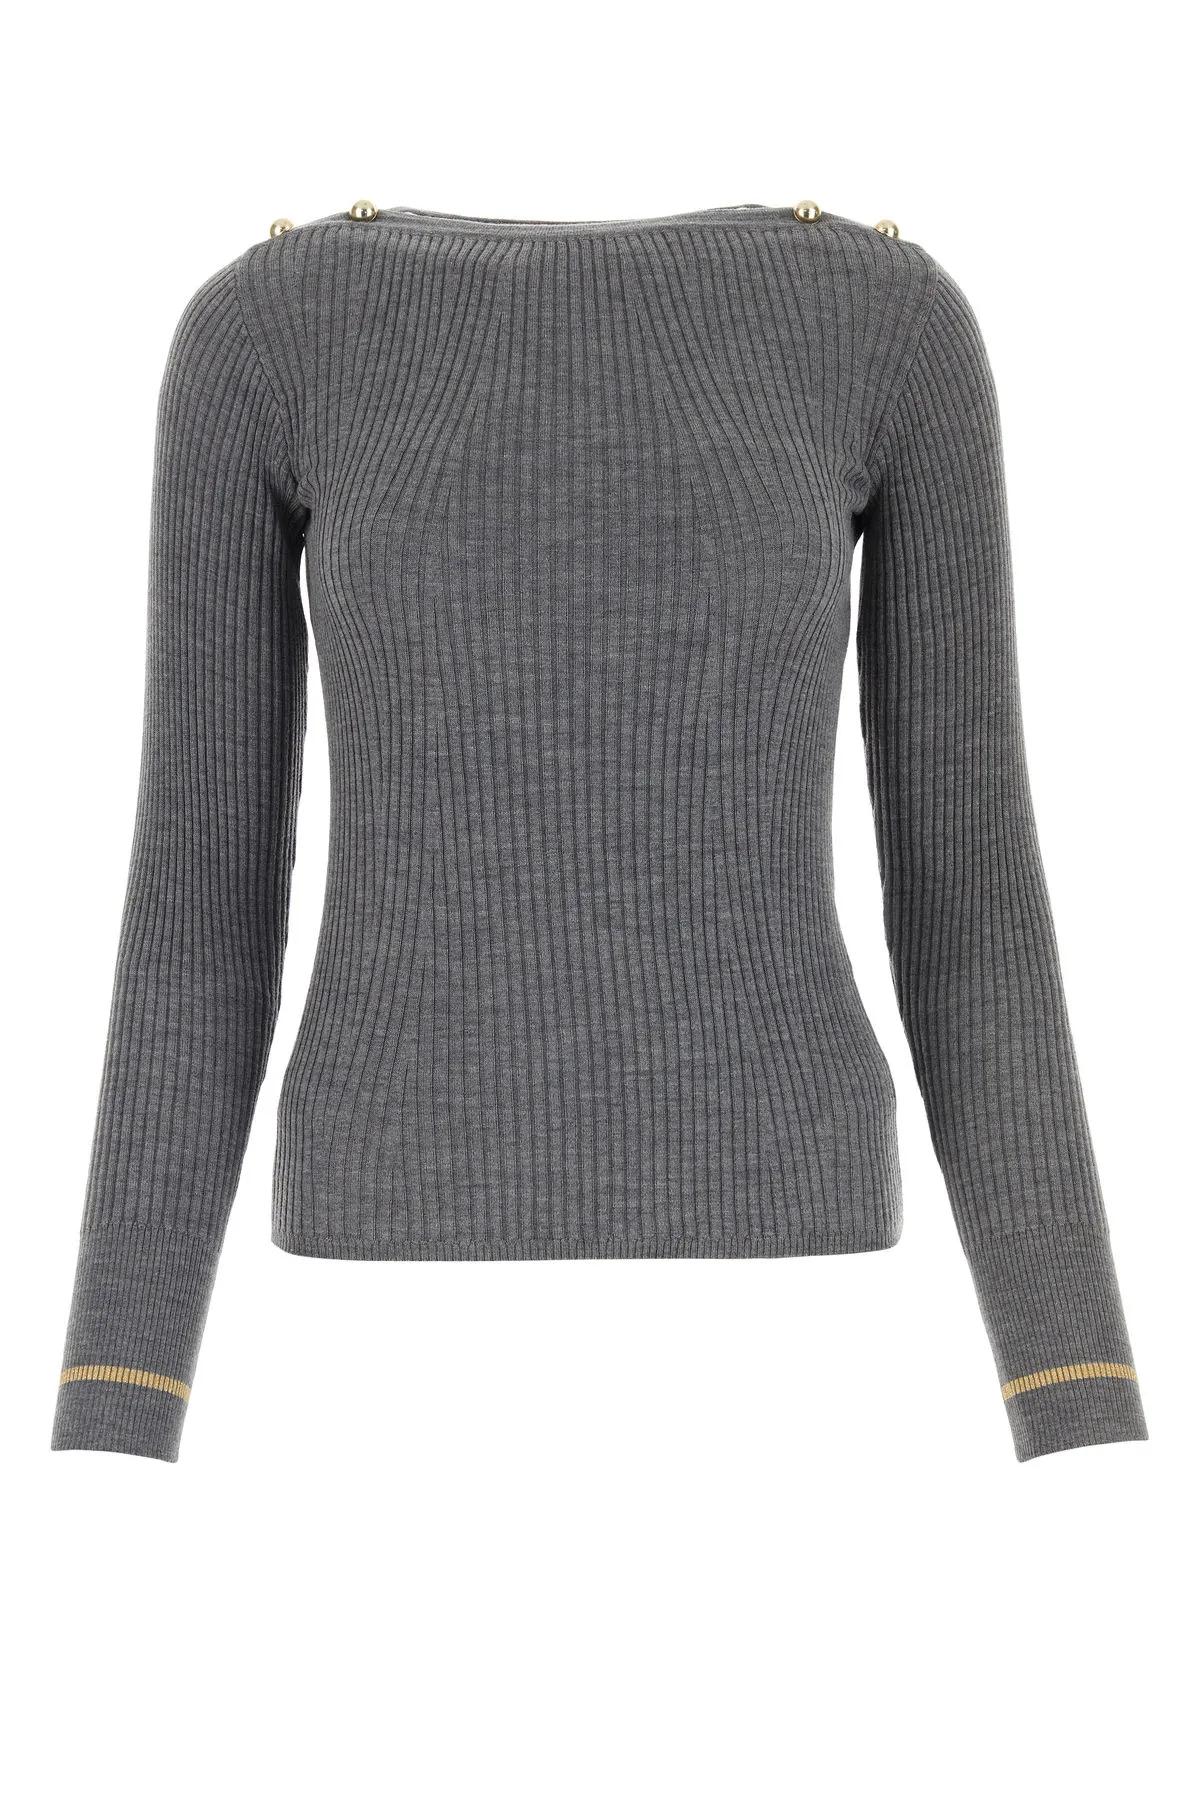 Max Mara Grey Wool Sweater